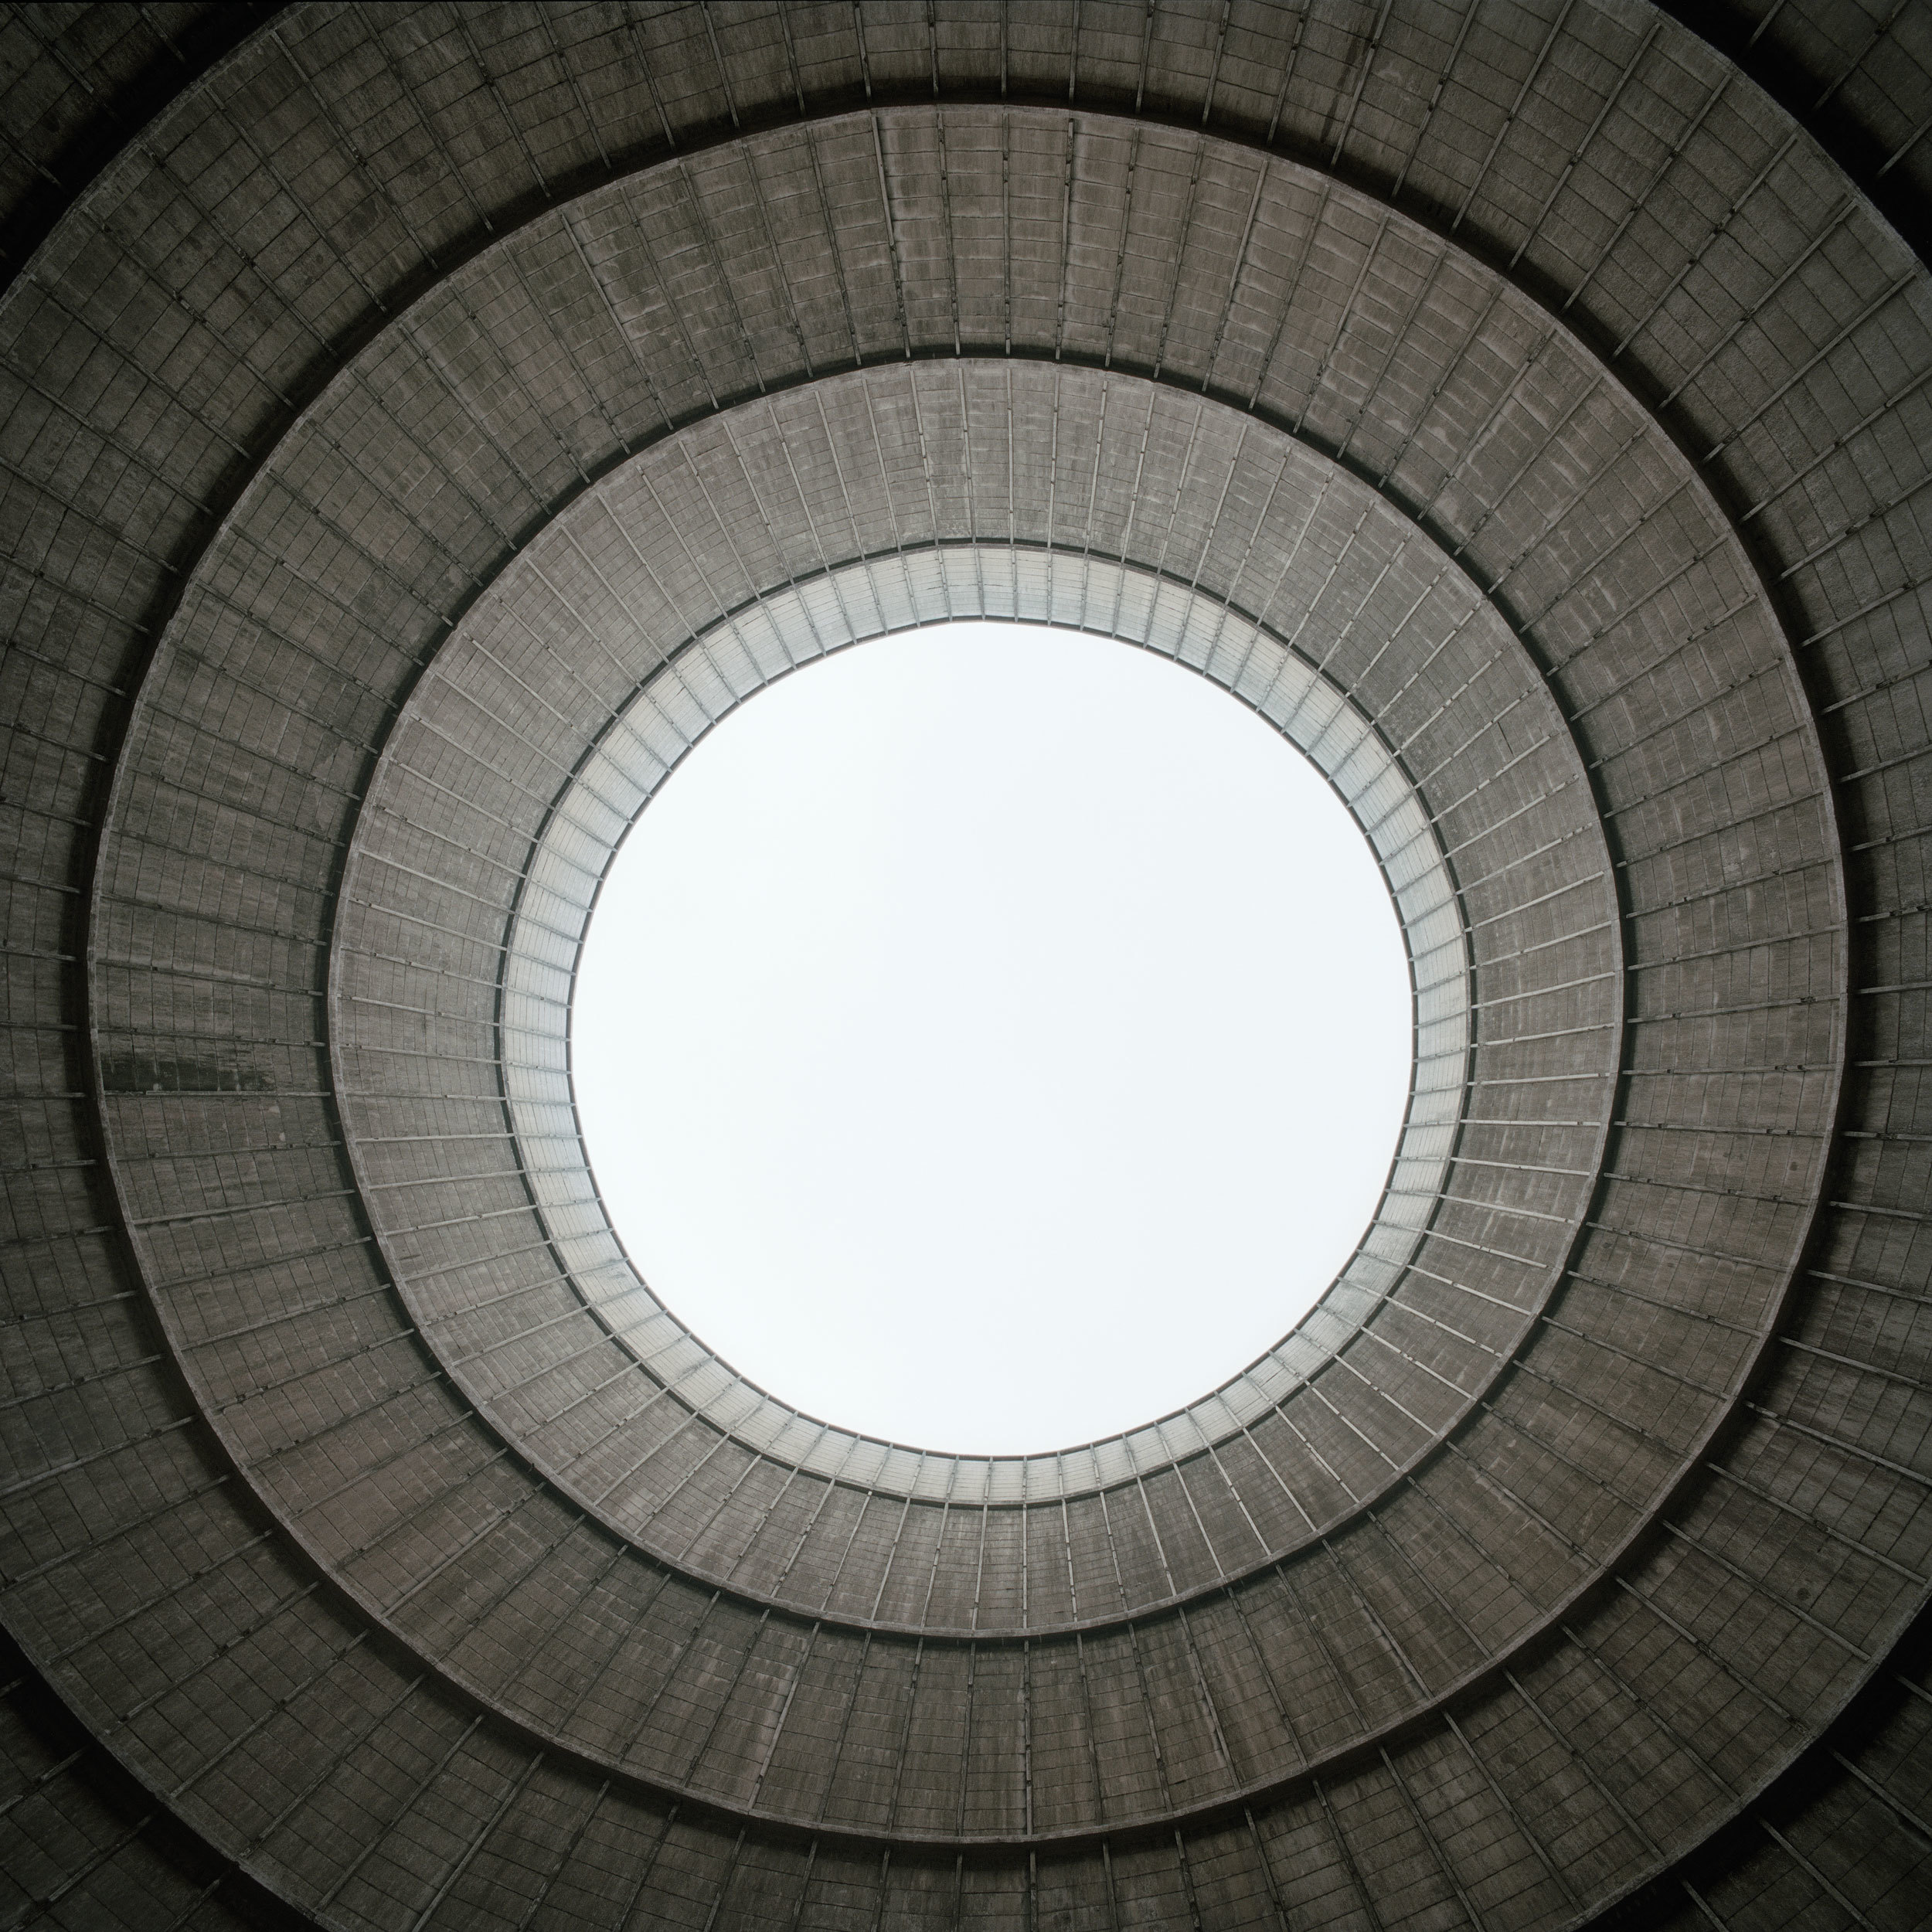 Cooling tower, Charleroi Belgium 2013, Lambda on dibond, 100 cm x 100 cm, edition 3/5 + 1 AP 